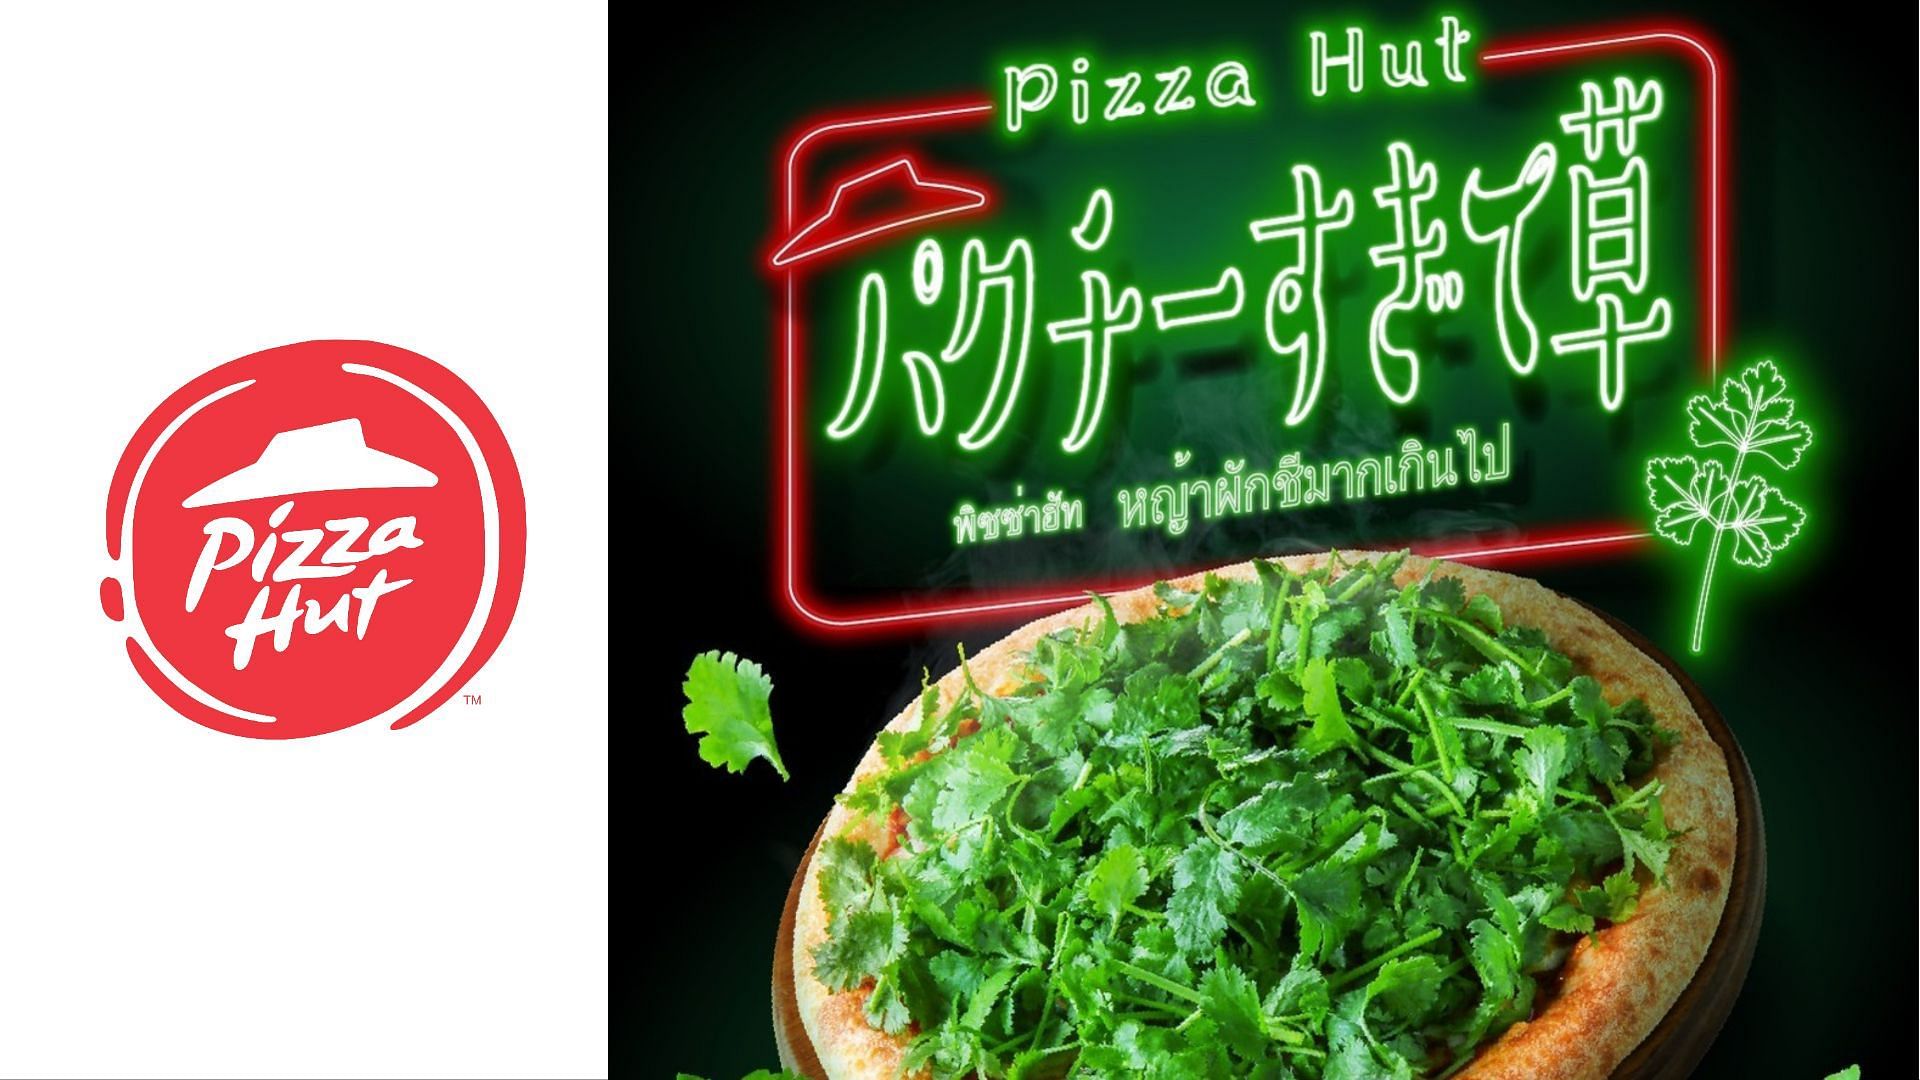 Pizza Hut Japan introduces a new Cilantro pizza (Image via Pizza Hut Japan)